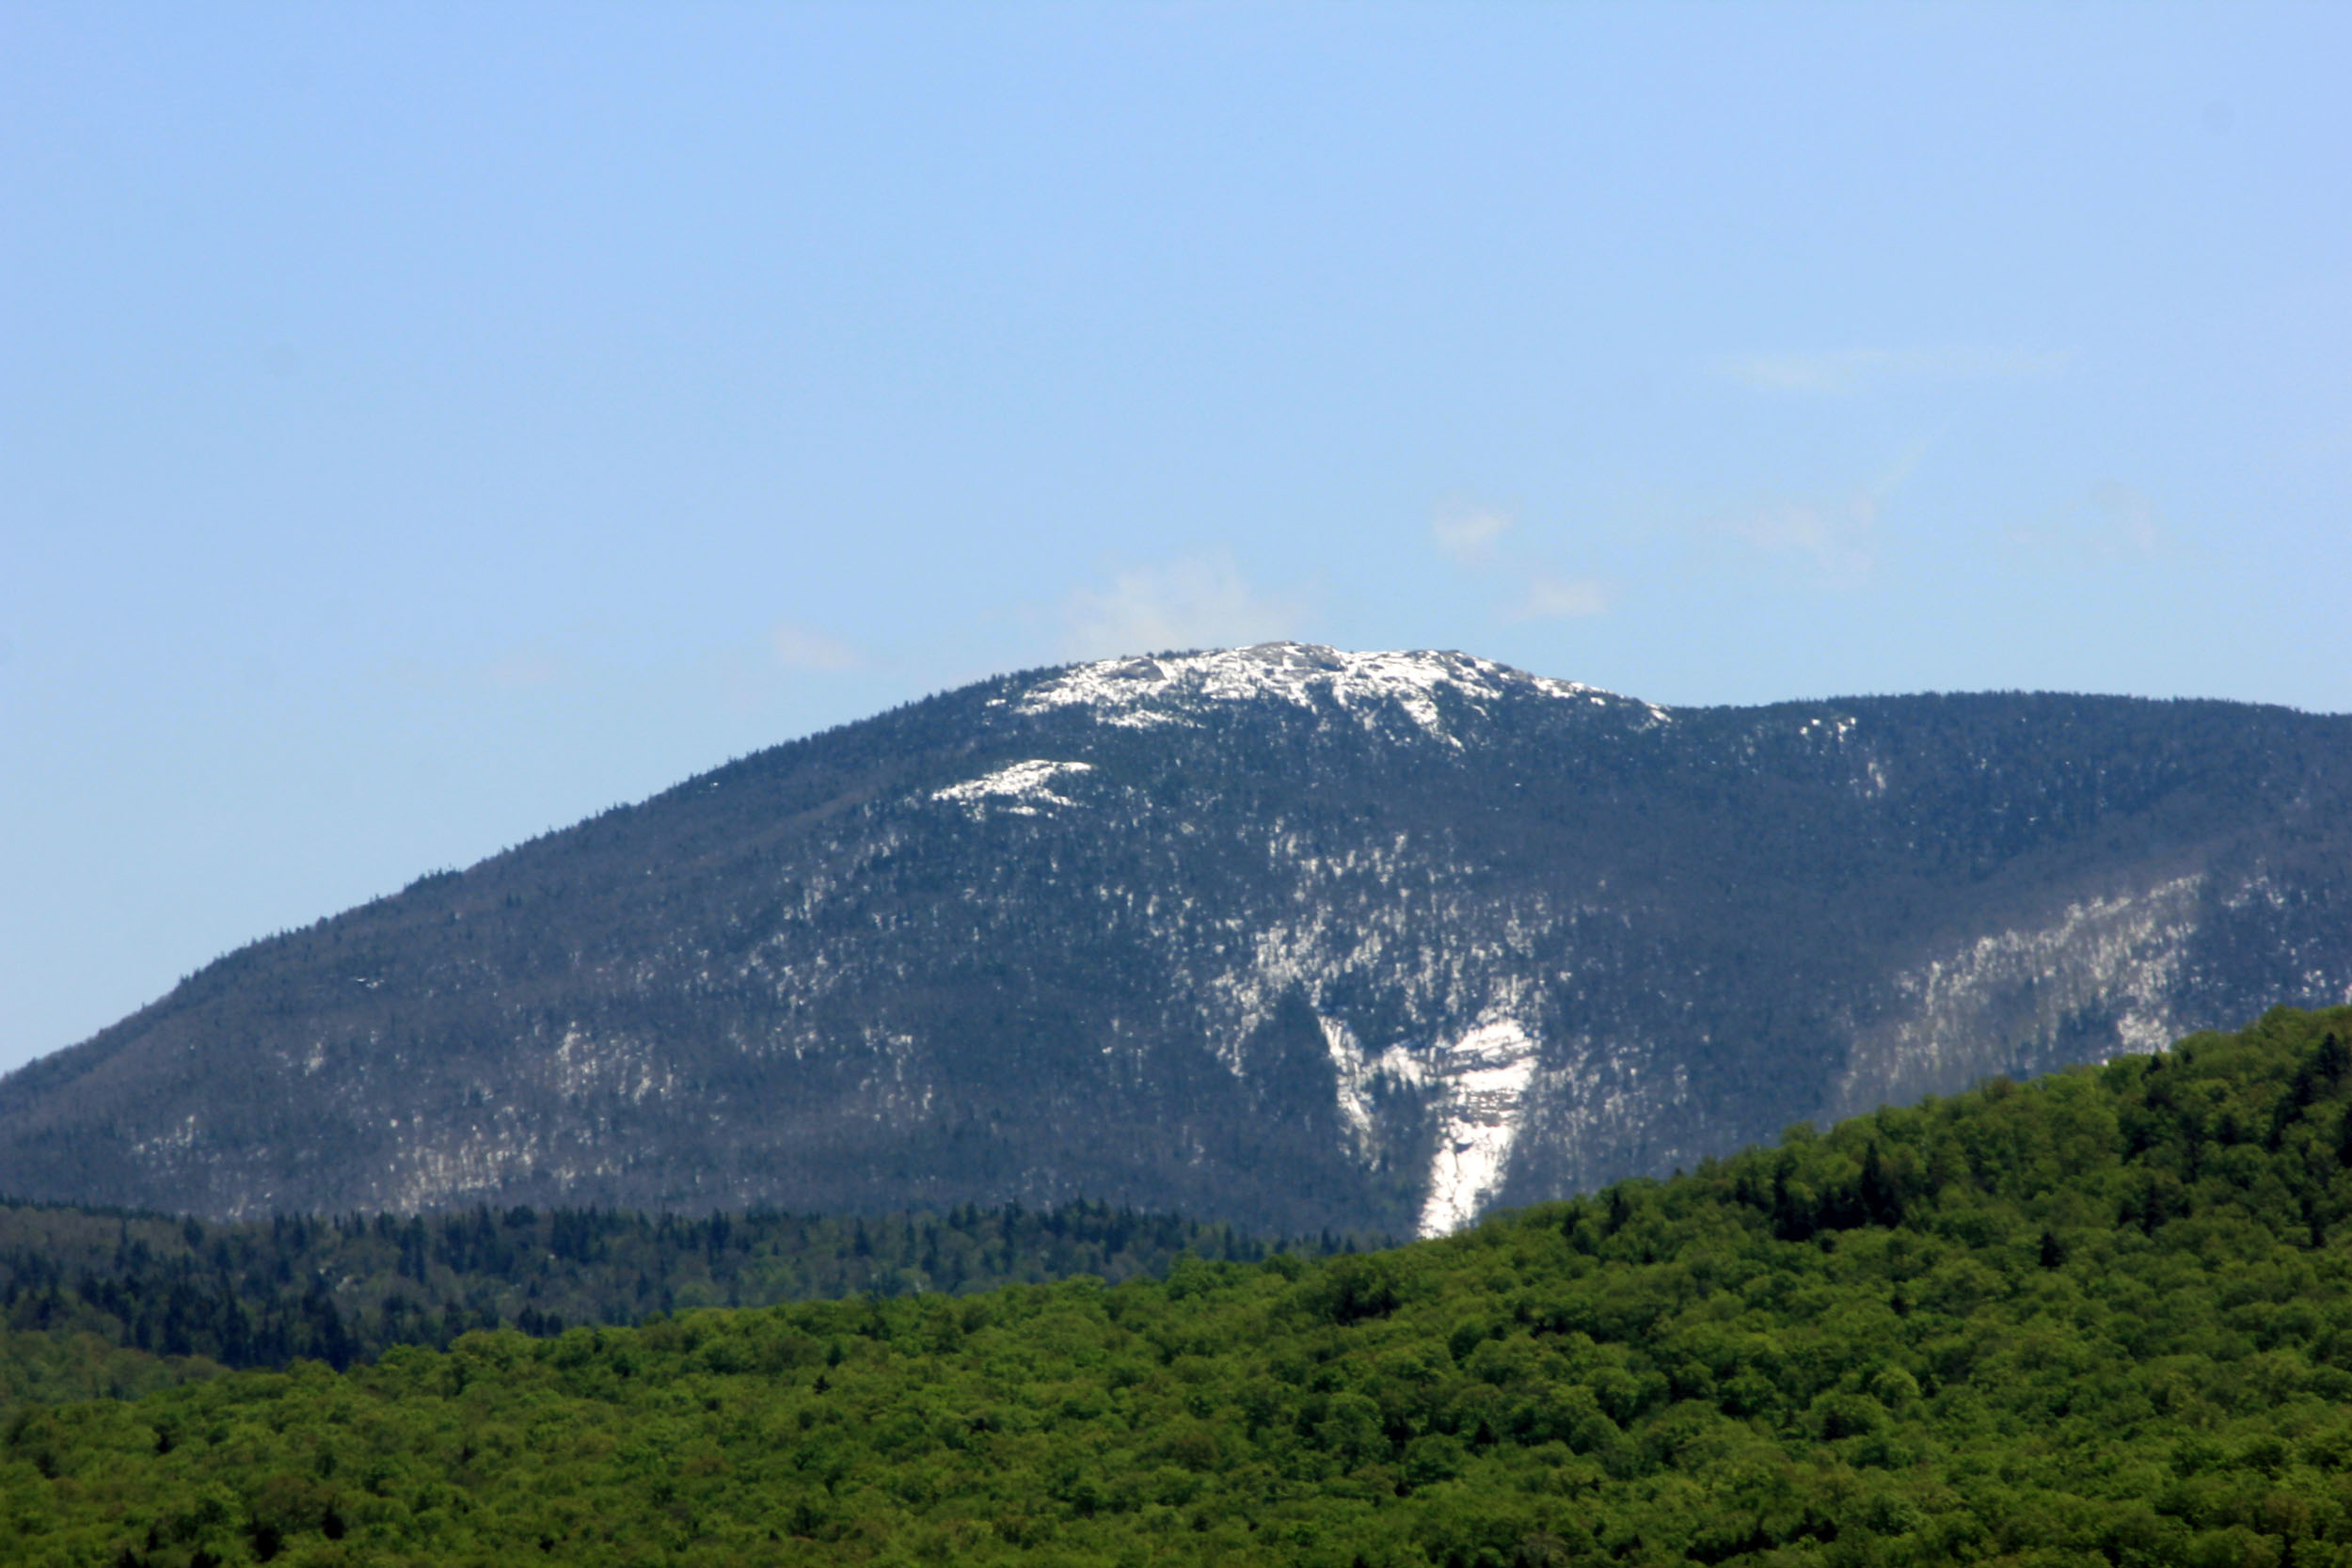 High Peak in the Adirondack Mountains, New York image - Free stock photo -  Public Domain photo - CC0 Images